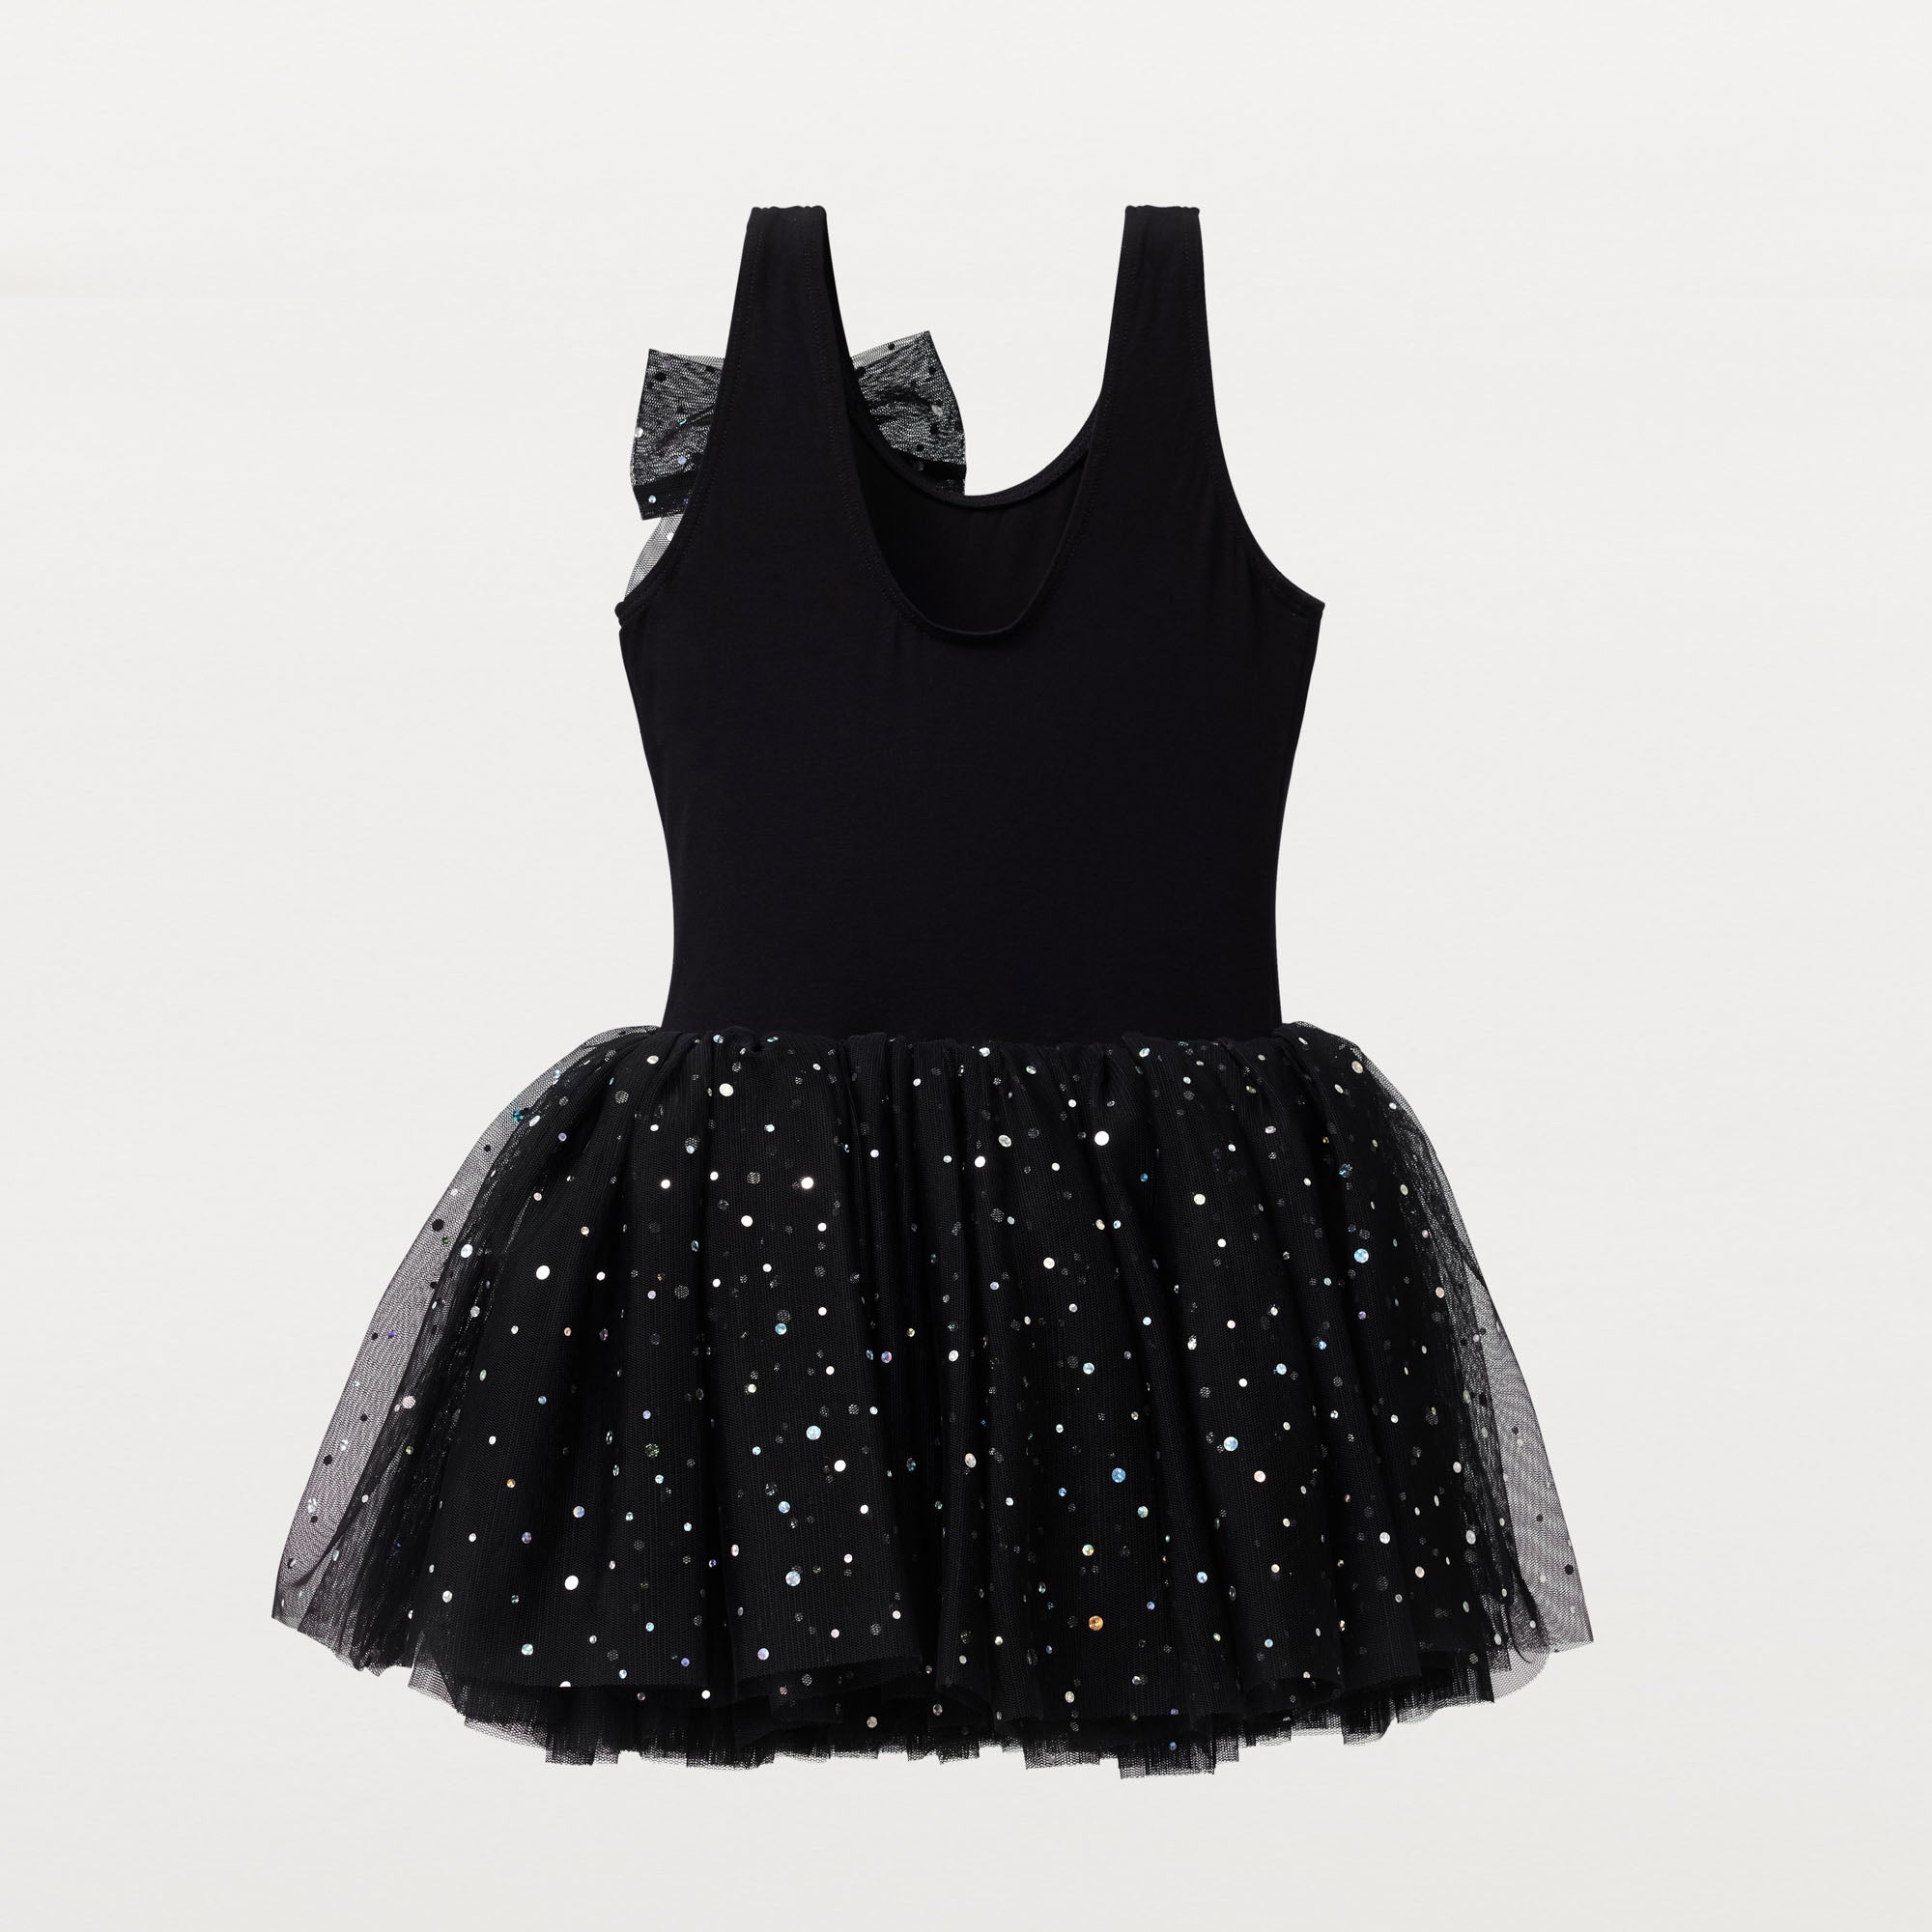 Flo Dancewear Girls Sequin Tutu Dress with Bow in Black